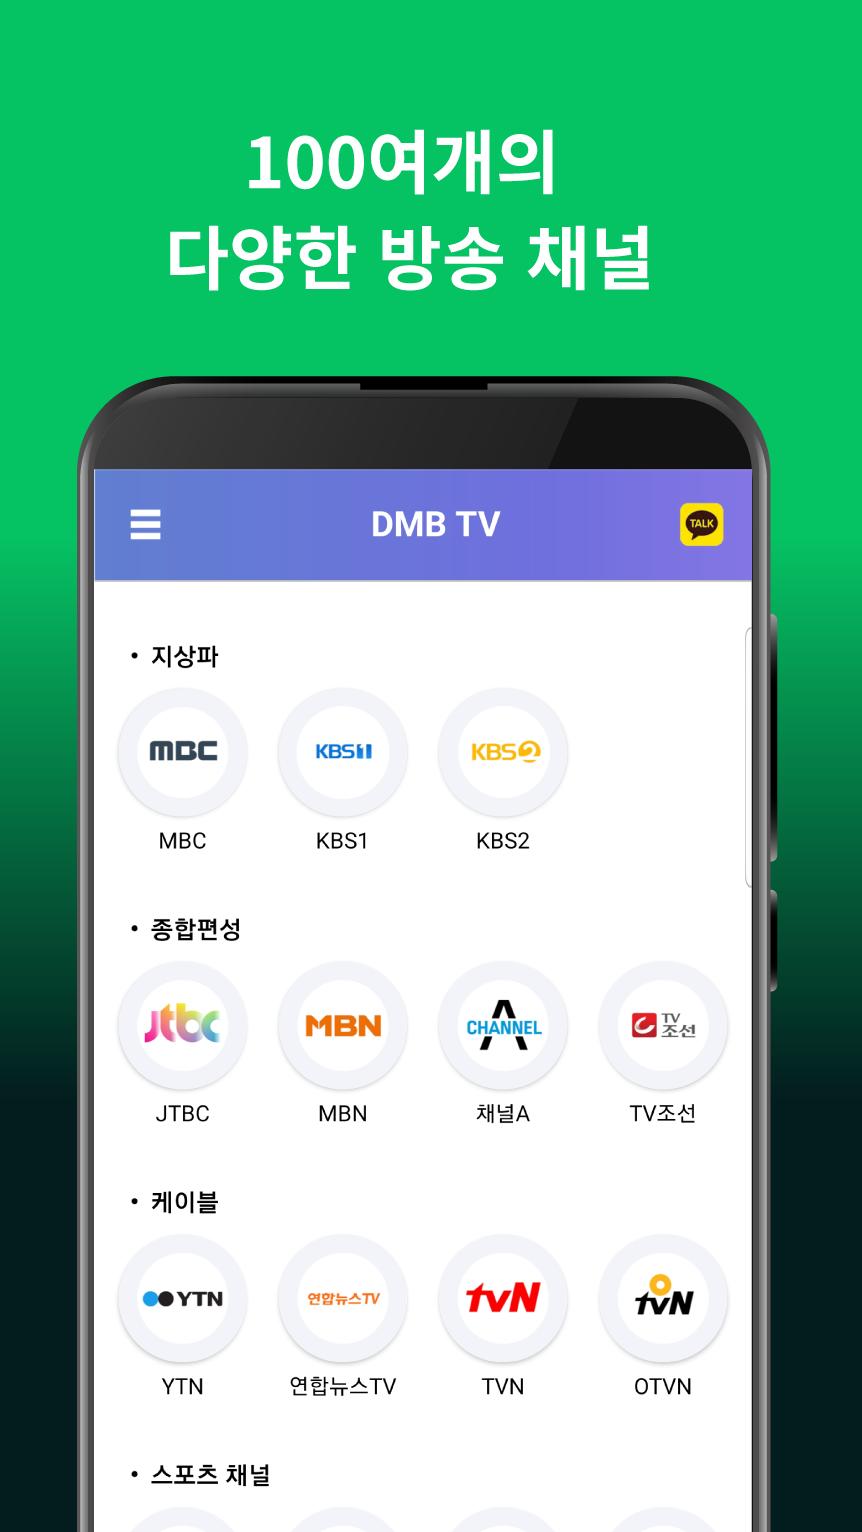 DMB TV 실시간무료TV, 실시간TV 방송, 지상파, 디엠비 방송시청, 모바일 무료티비 1.0.1 Screenshot 12